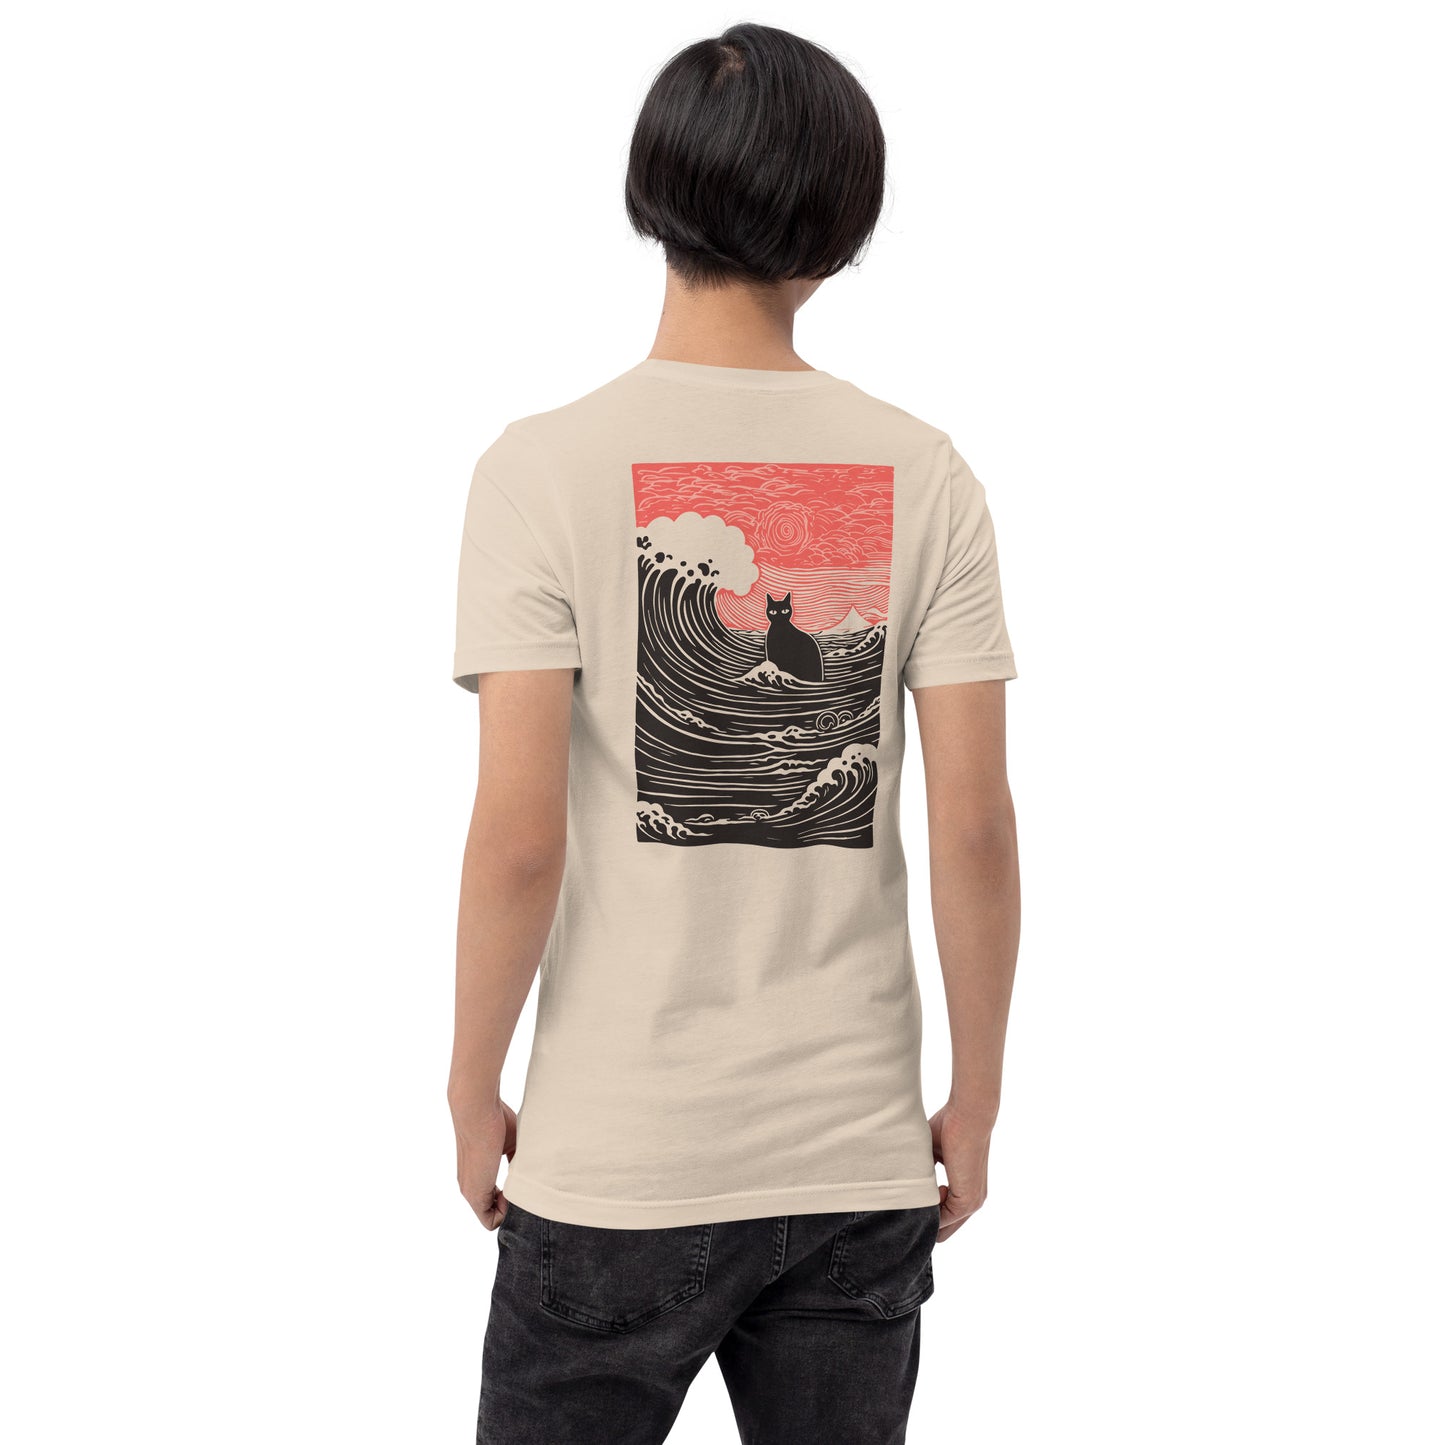 Black Cat on the Ocean T-Shirt